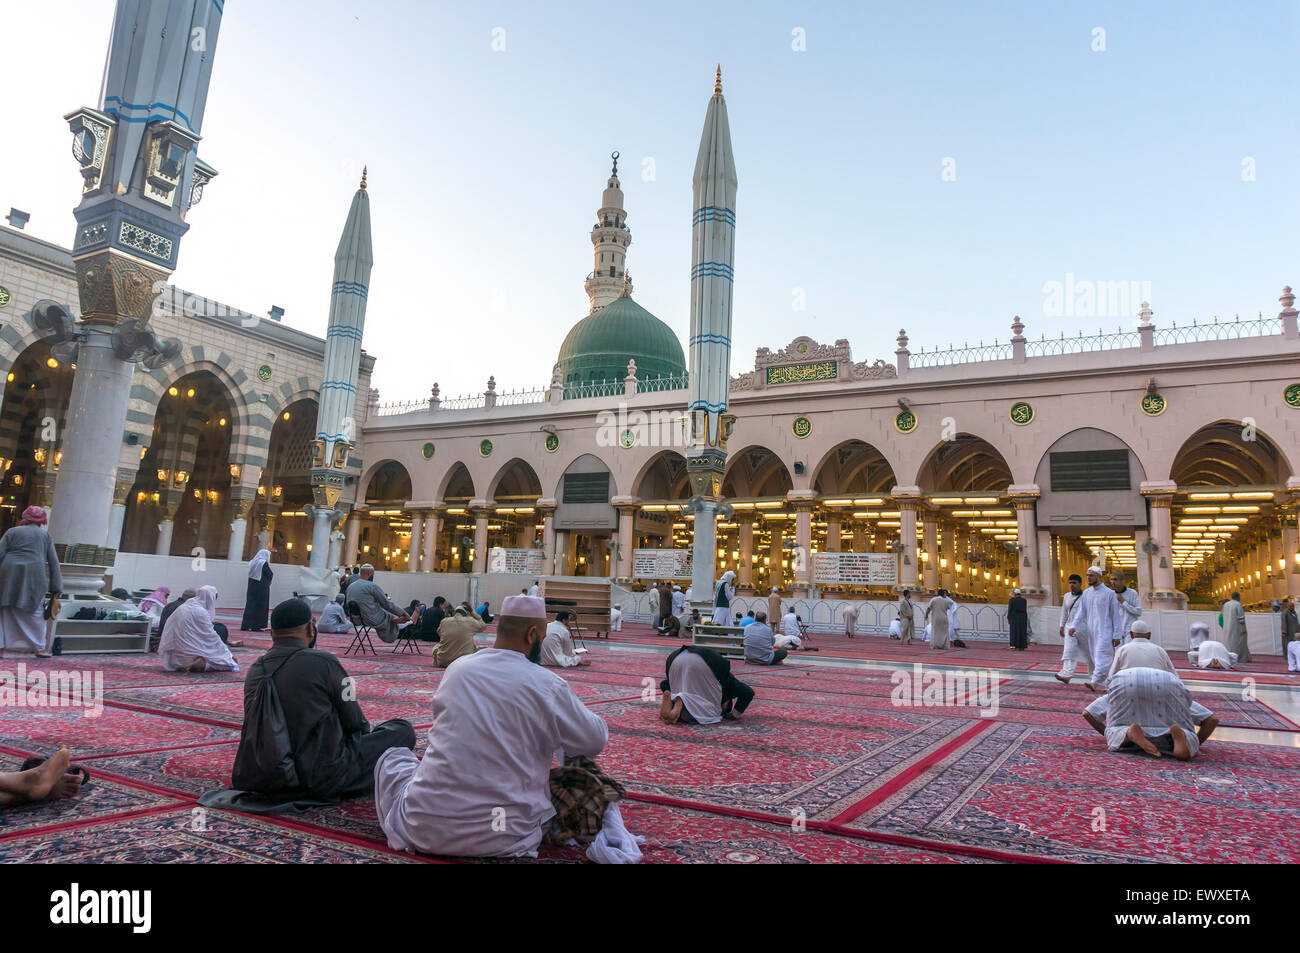 MEDINA, SAUDI ARABIA - MARCH 09, 2015 : Muslims read Quran and pray inside Nabawi mosque. Stock Photo